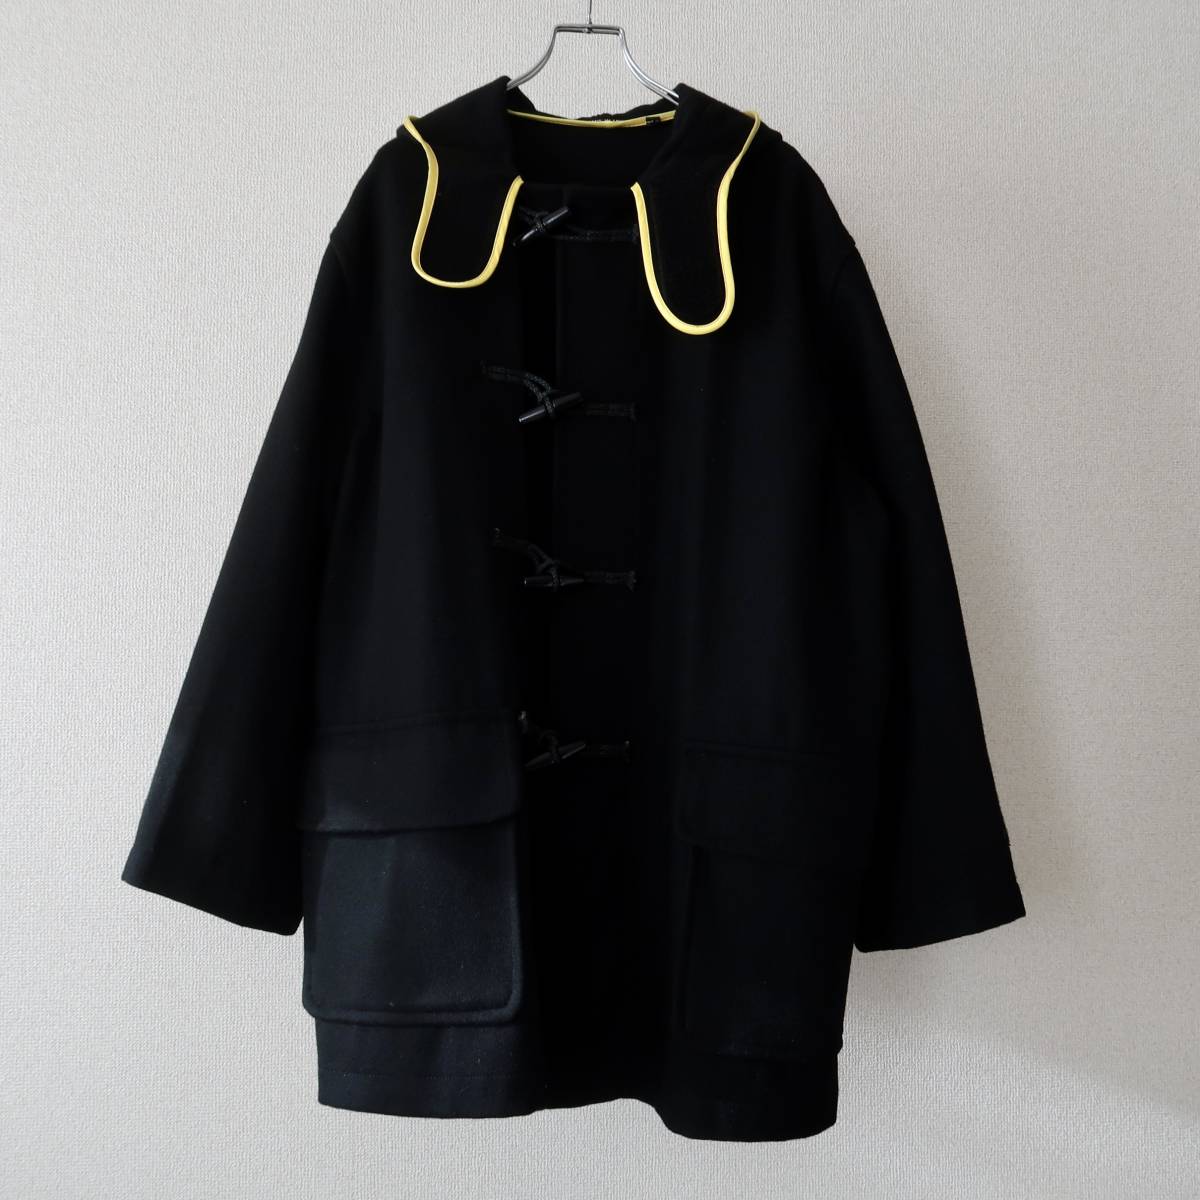  Britain made Old Dr. Martens clothing 80/20 black melt n wool & yellow sa tent rim duffle coat L degree / Vintage Martin black 